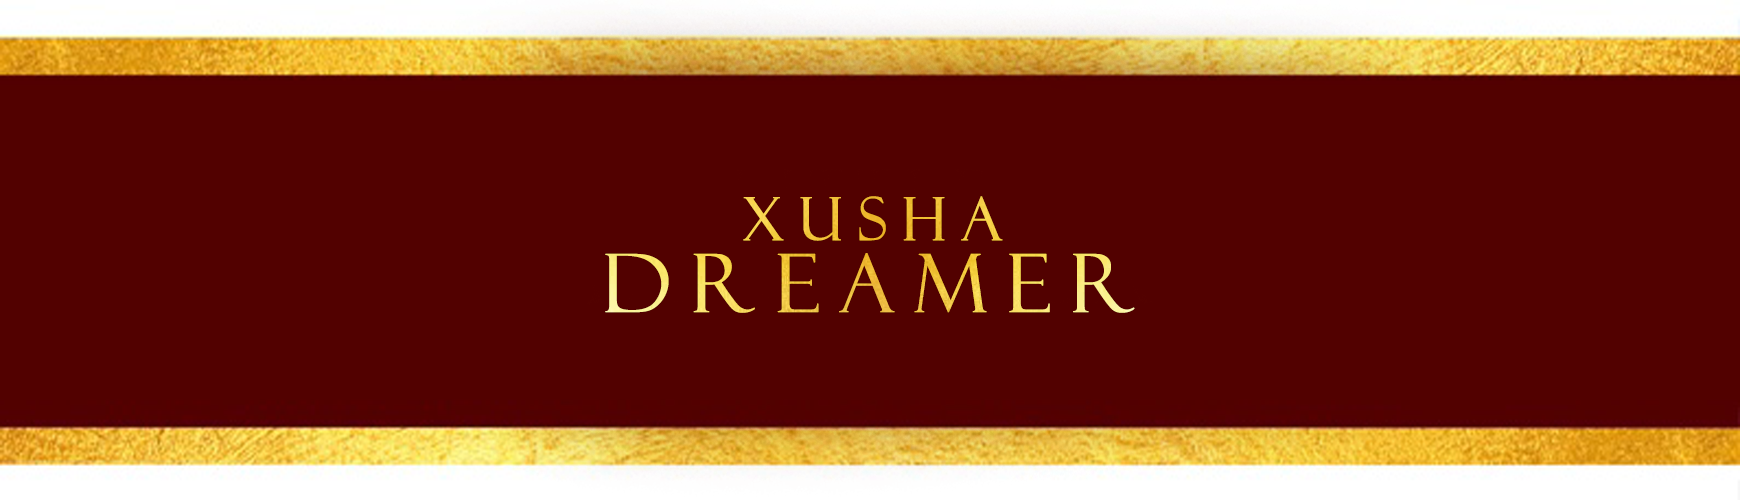 Xusha Dreamer